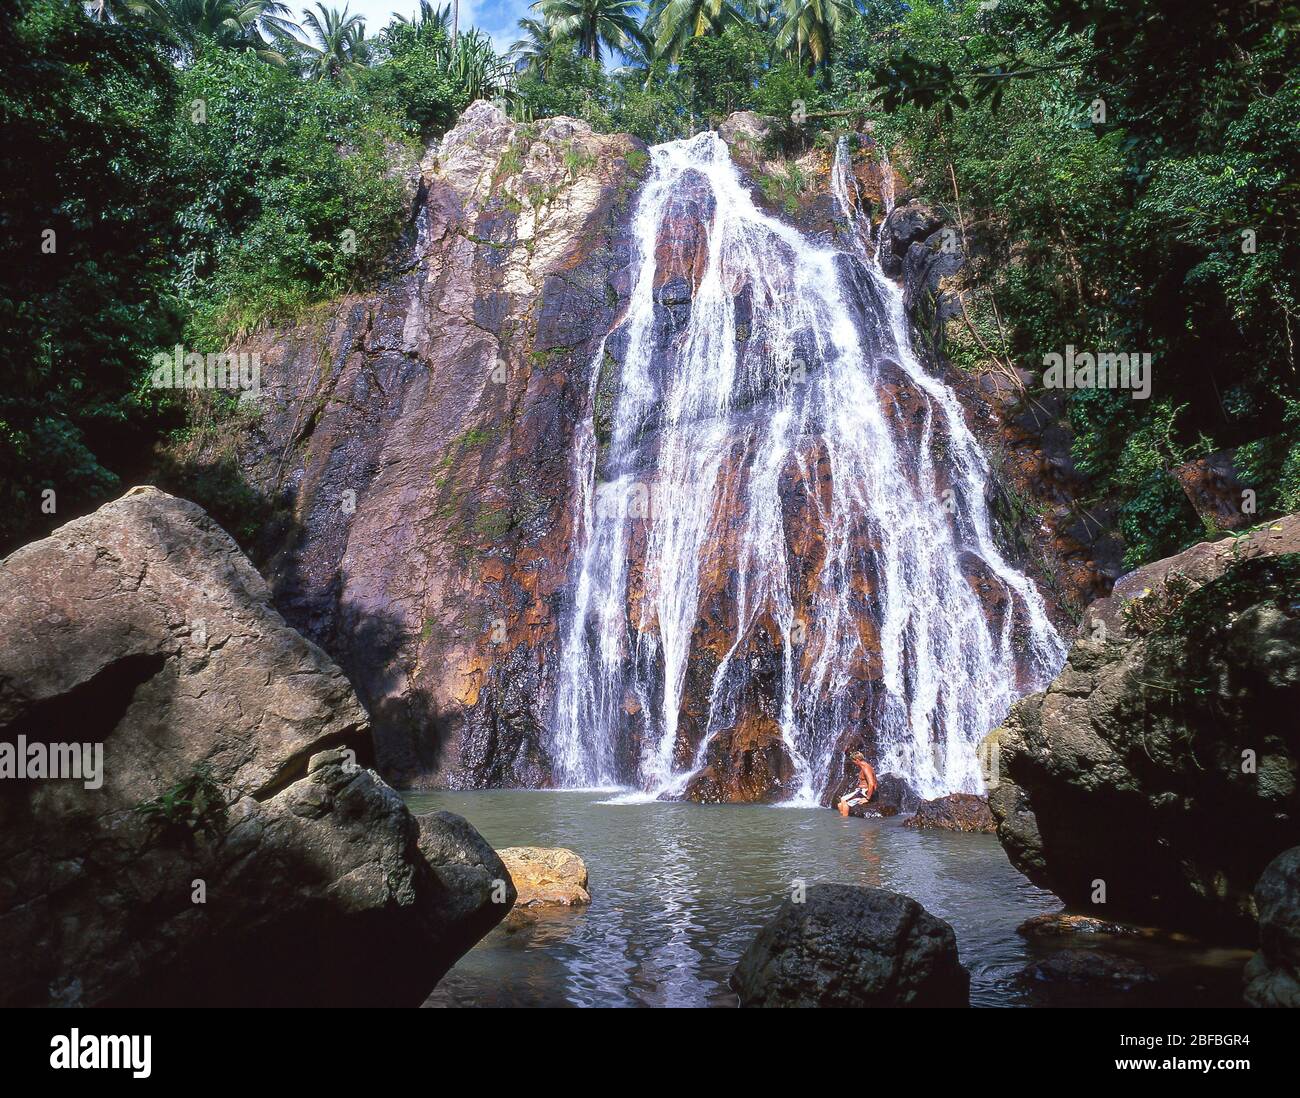 Cascate di Namuang, Na Mueang, Koh Samui, provincia di Surat Thani, Regno di Thailandia Foto Stock